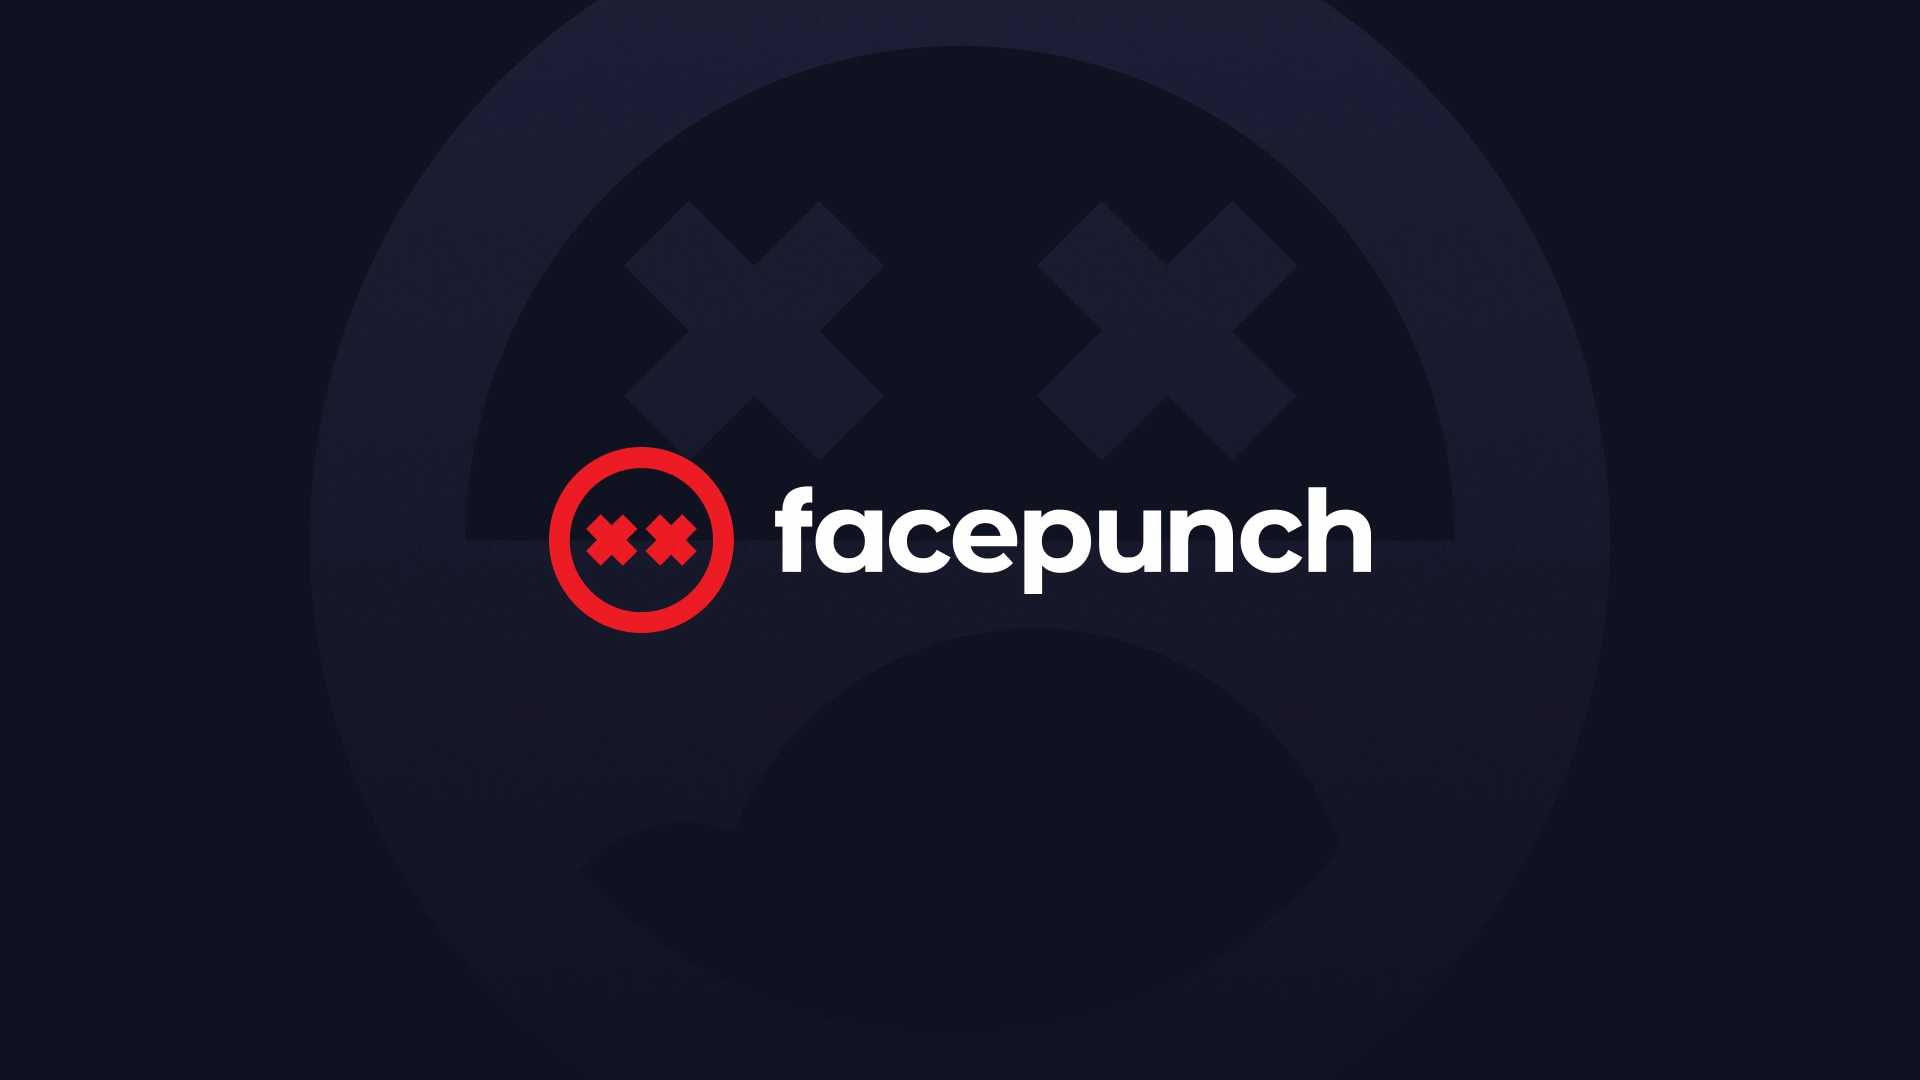 Facepunch